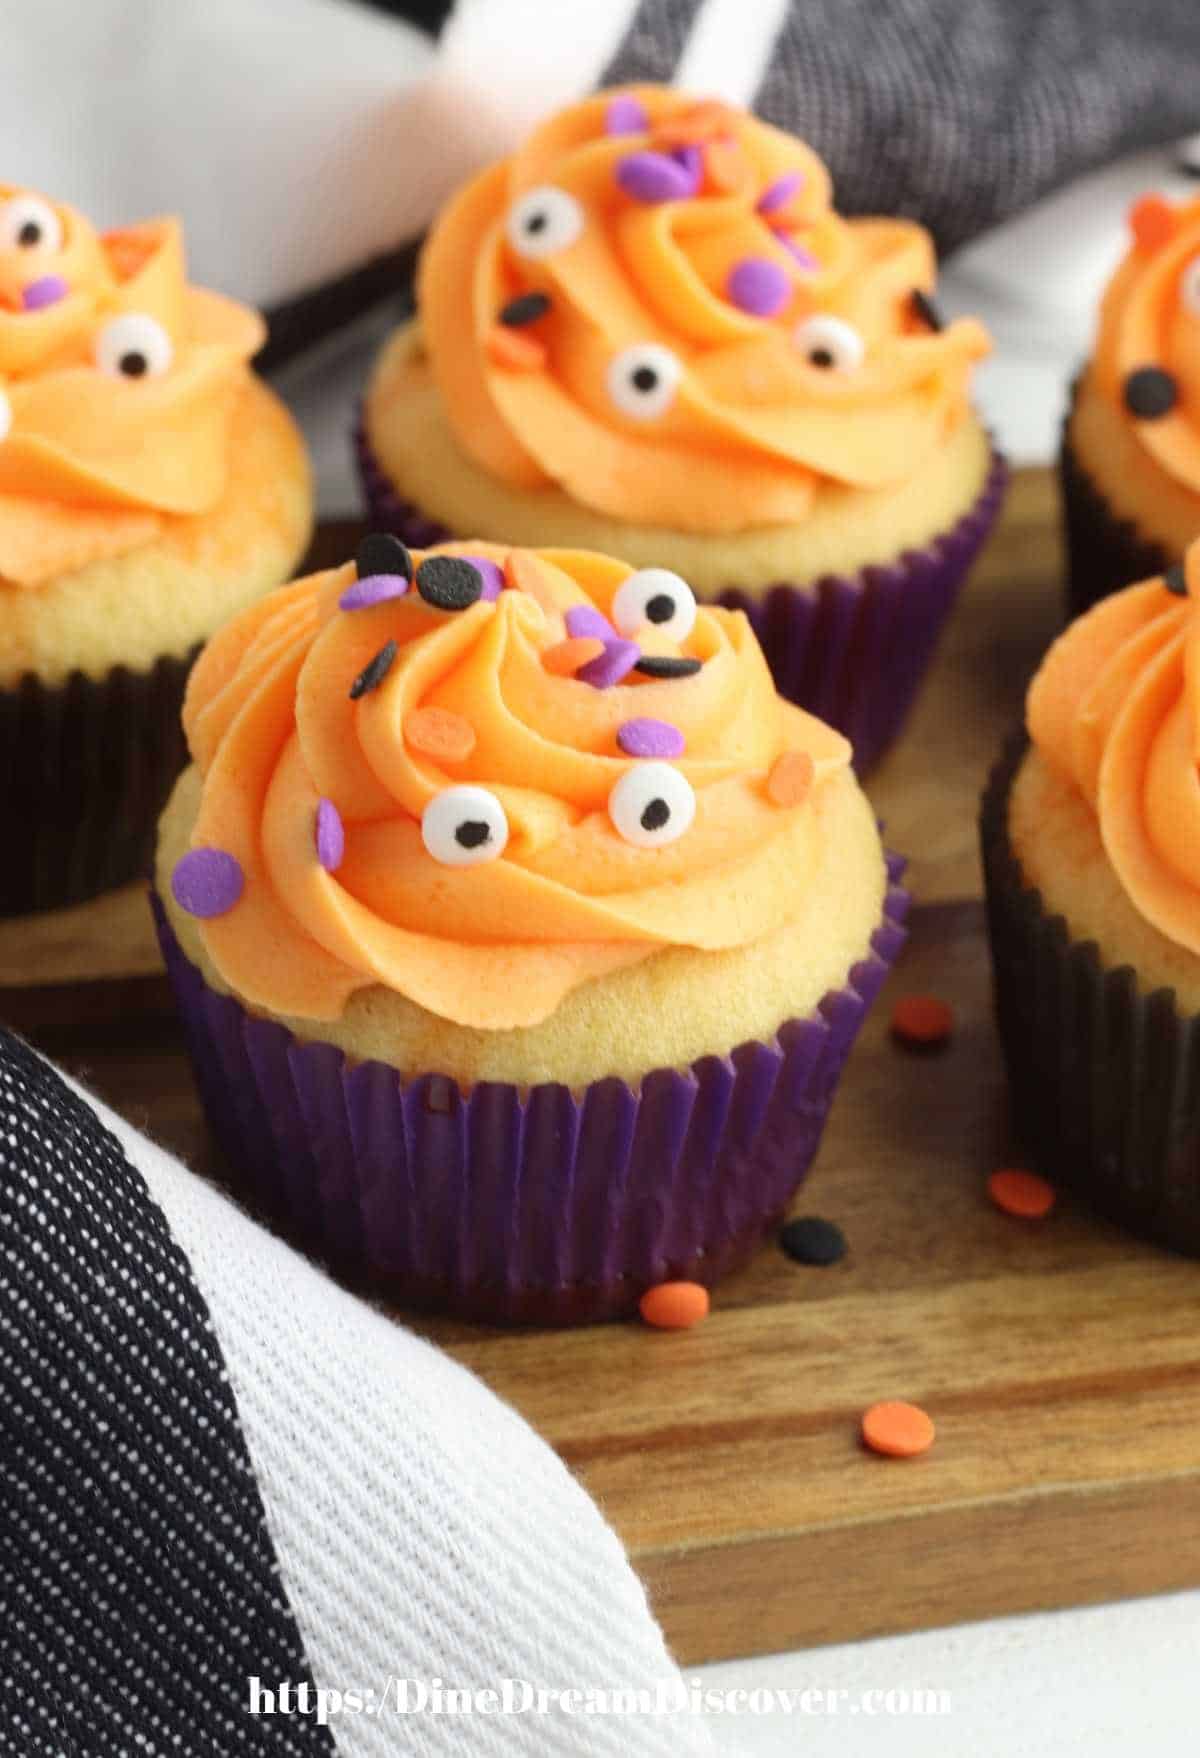 Halloween Poke Cake Cupcakes